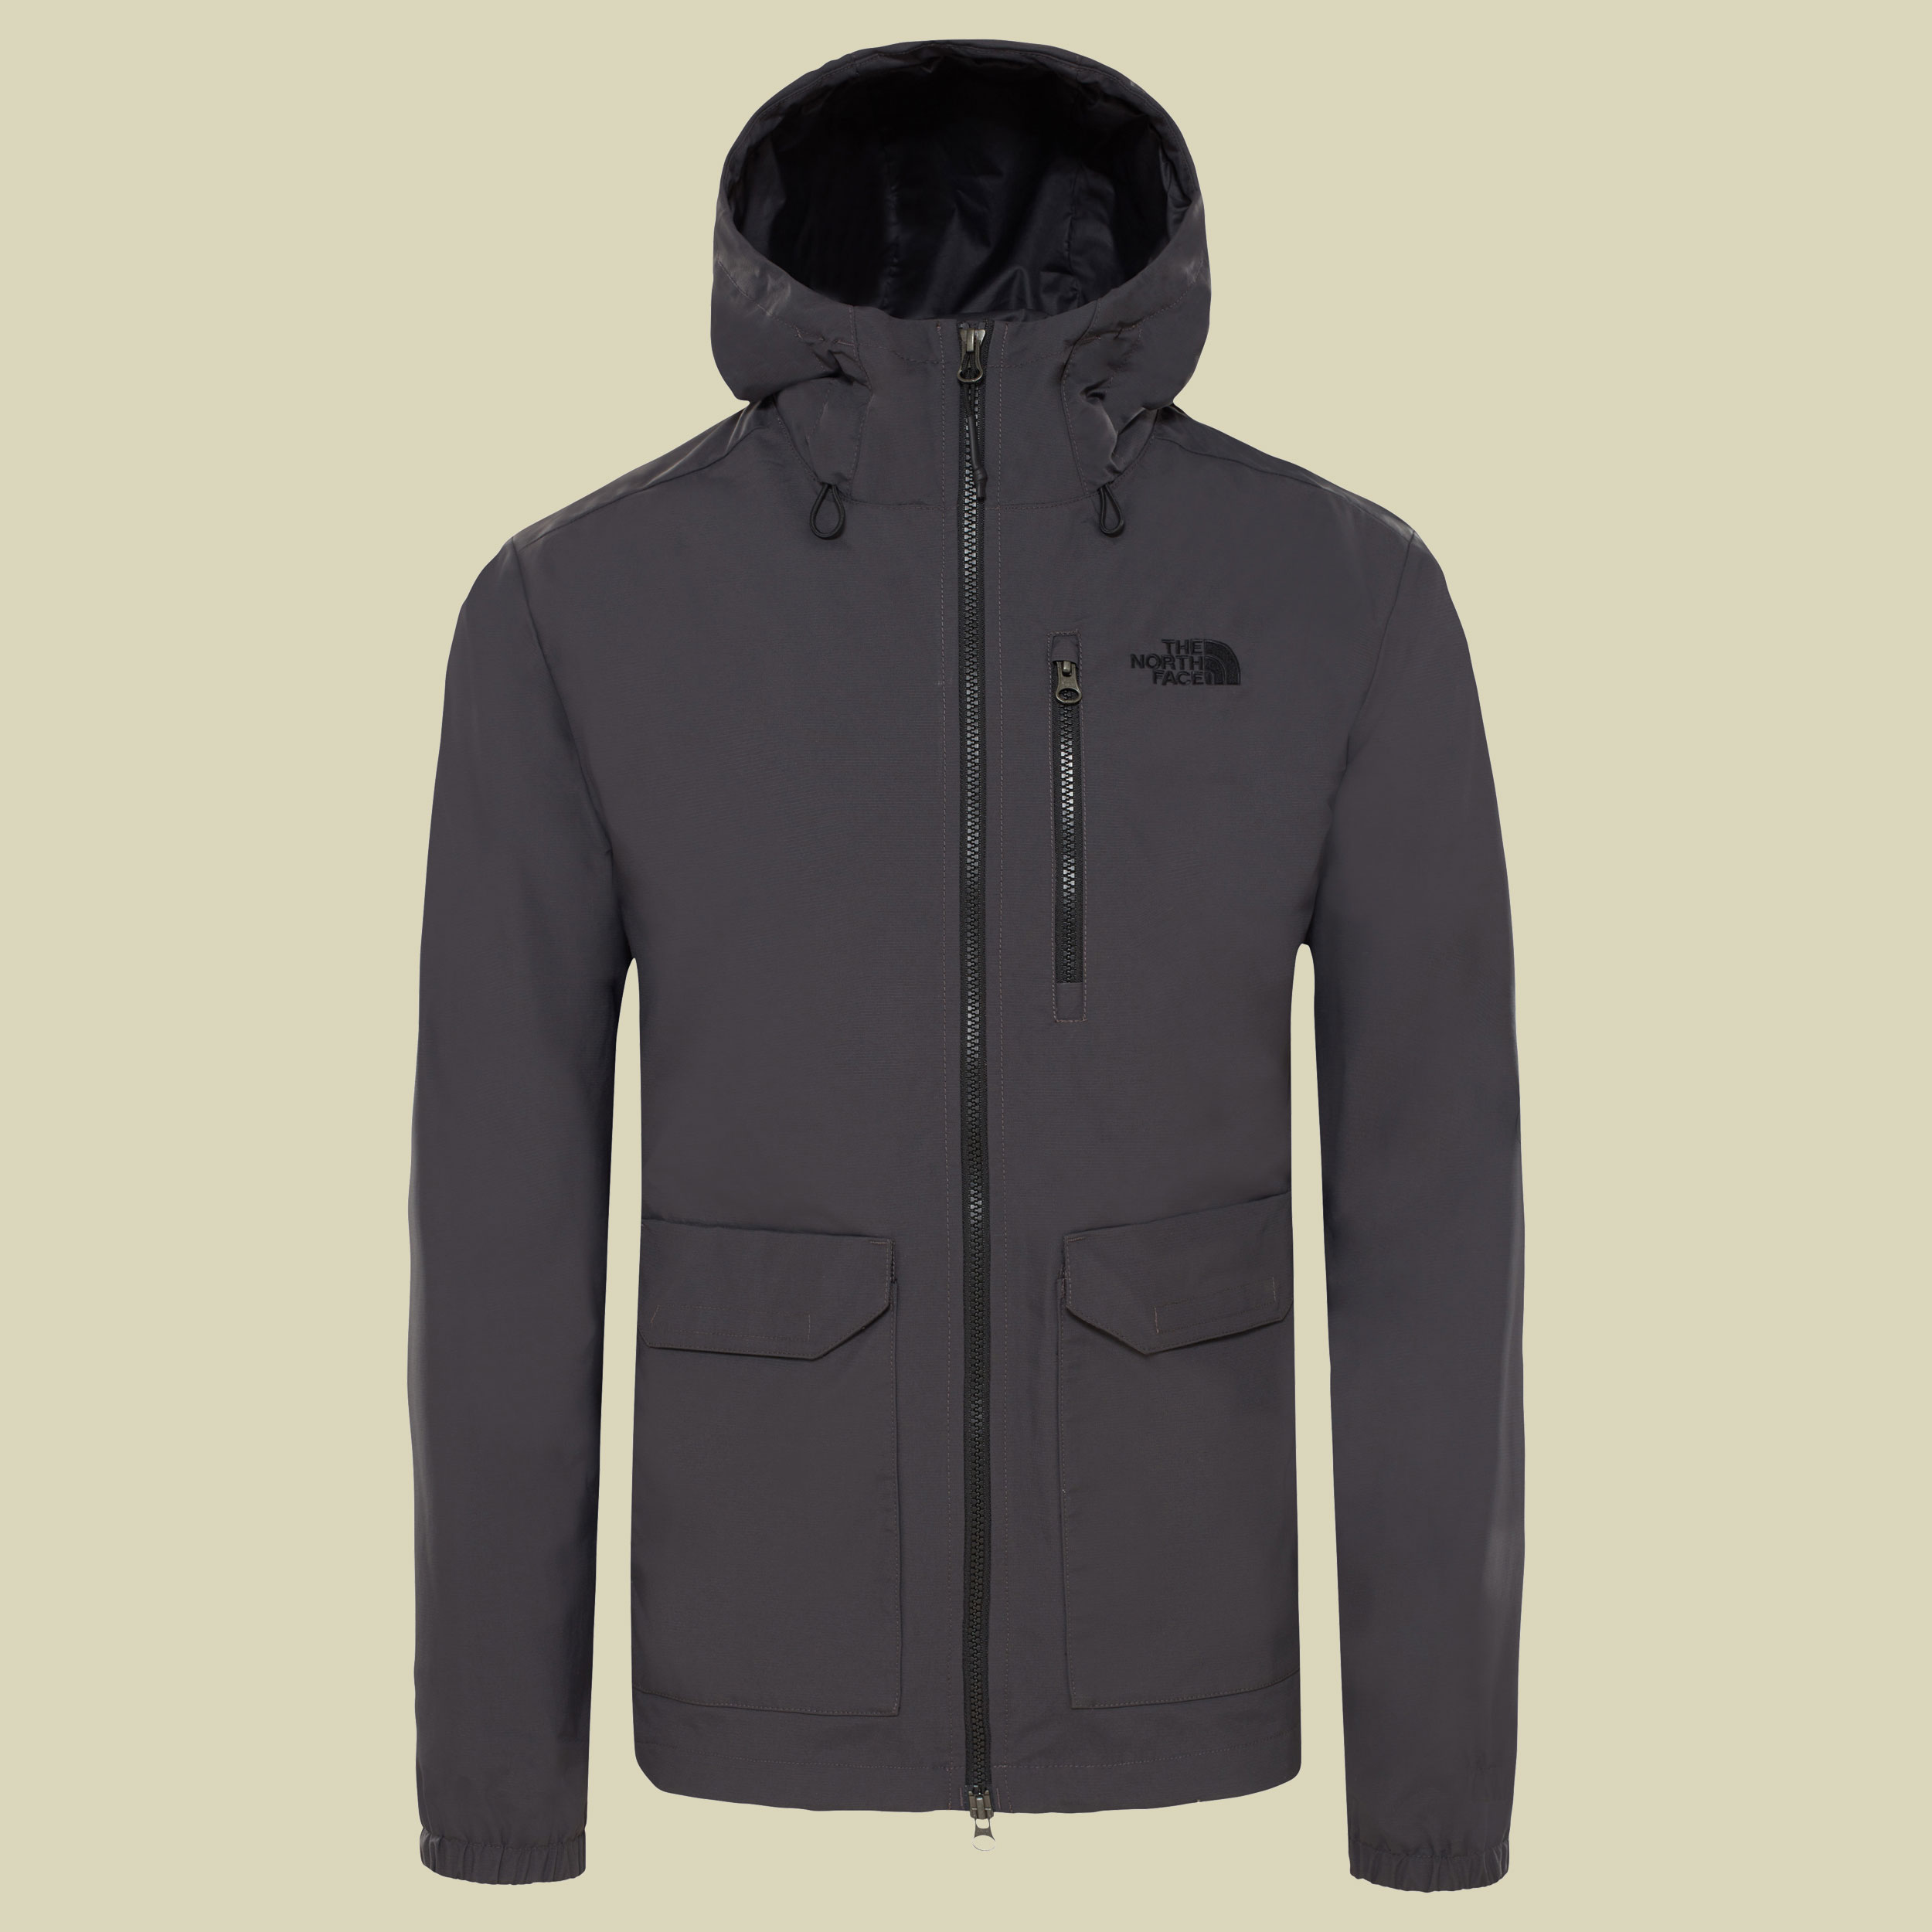 Jackstraw Jacket/Wind Jacket II Men Größe XL Farbe asphalt grey